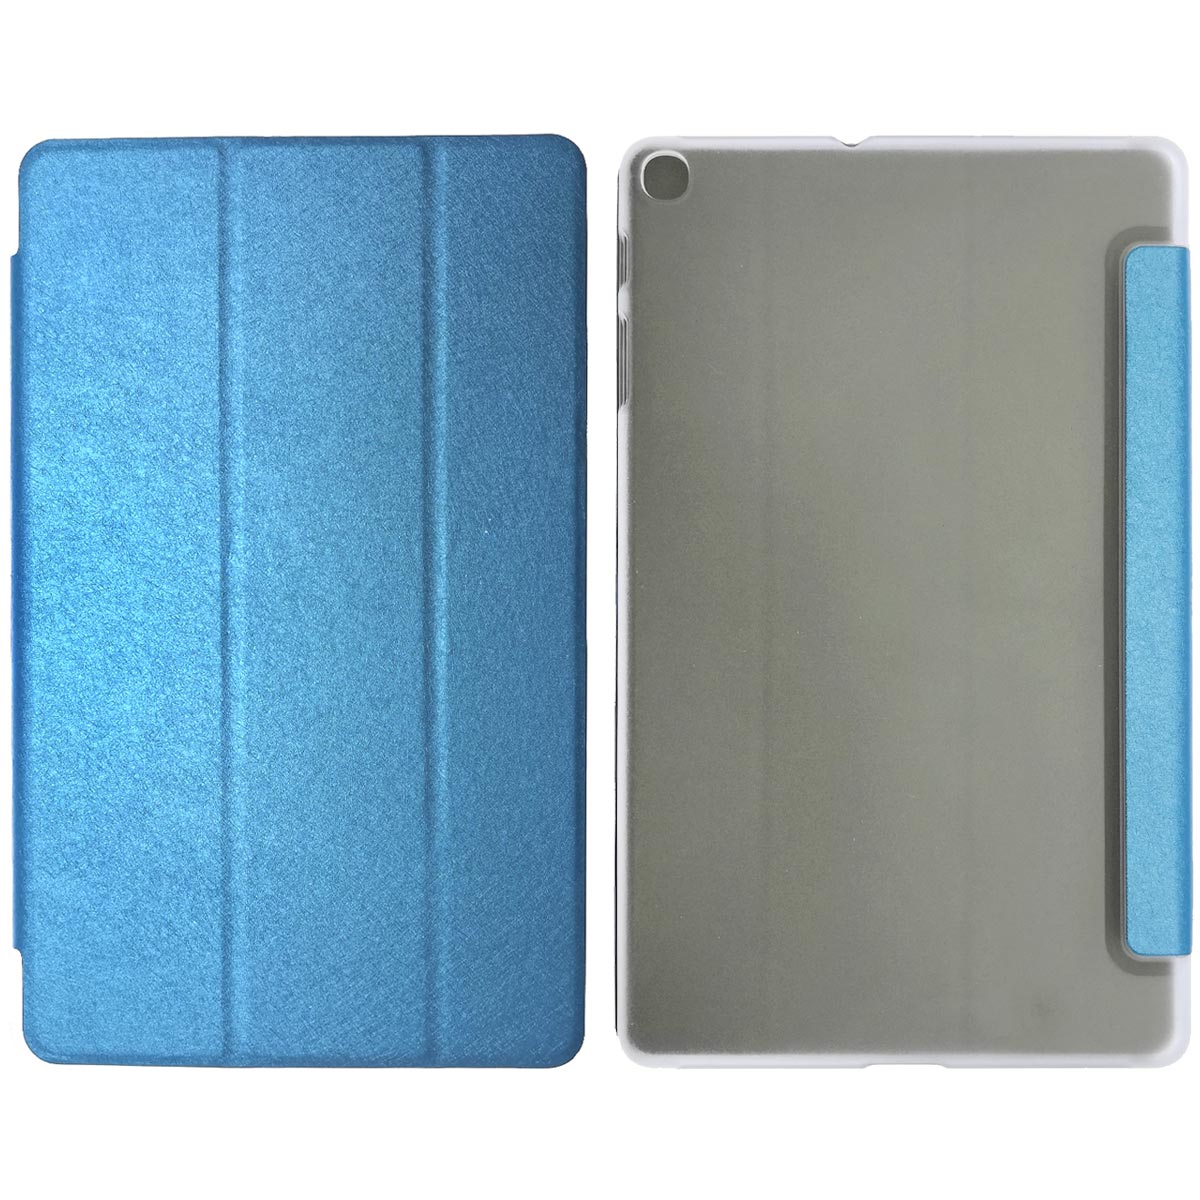 Чехол книжка Trans Cover для SAMSUNG Galaxy Tab A 10.1 2019 (SM-T510, SM-T515), экокожа, цвет голубой